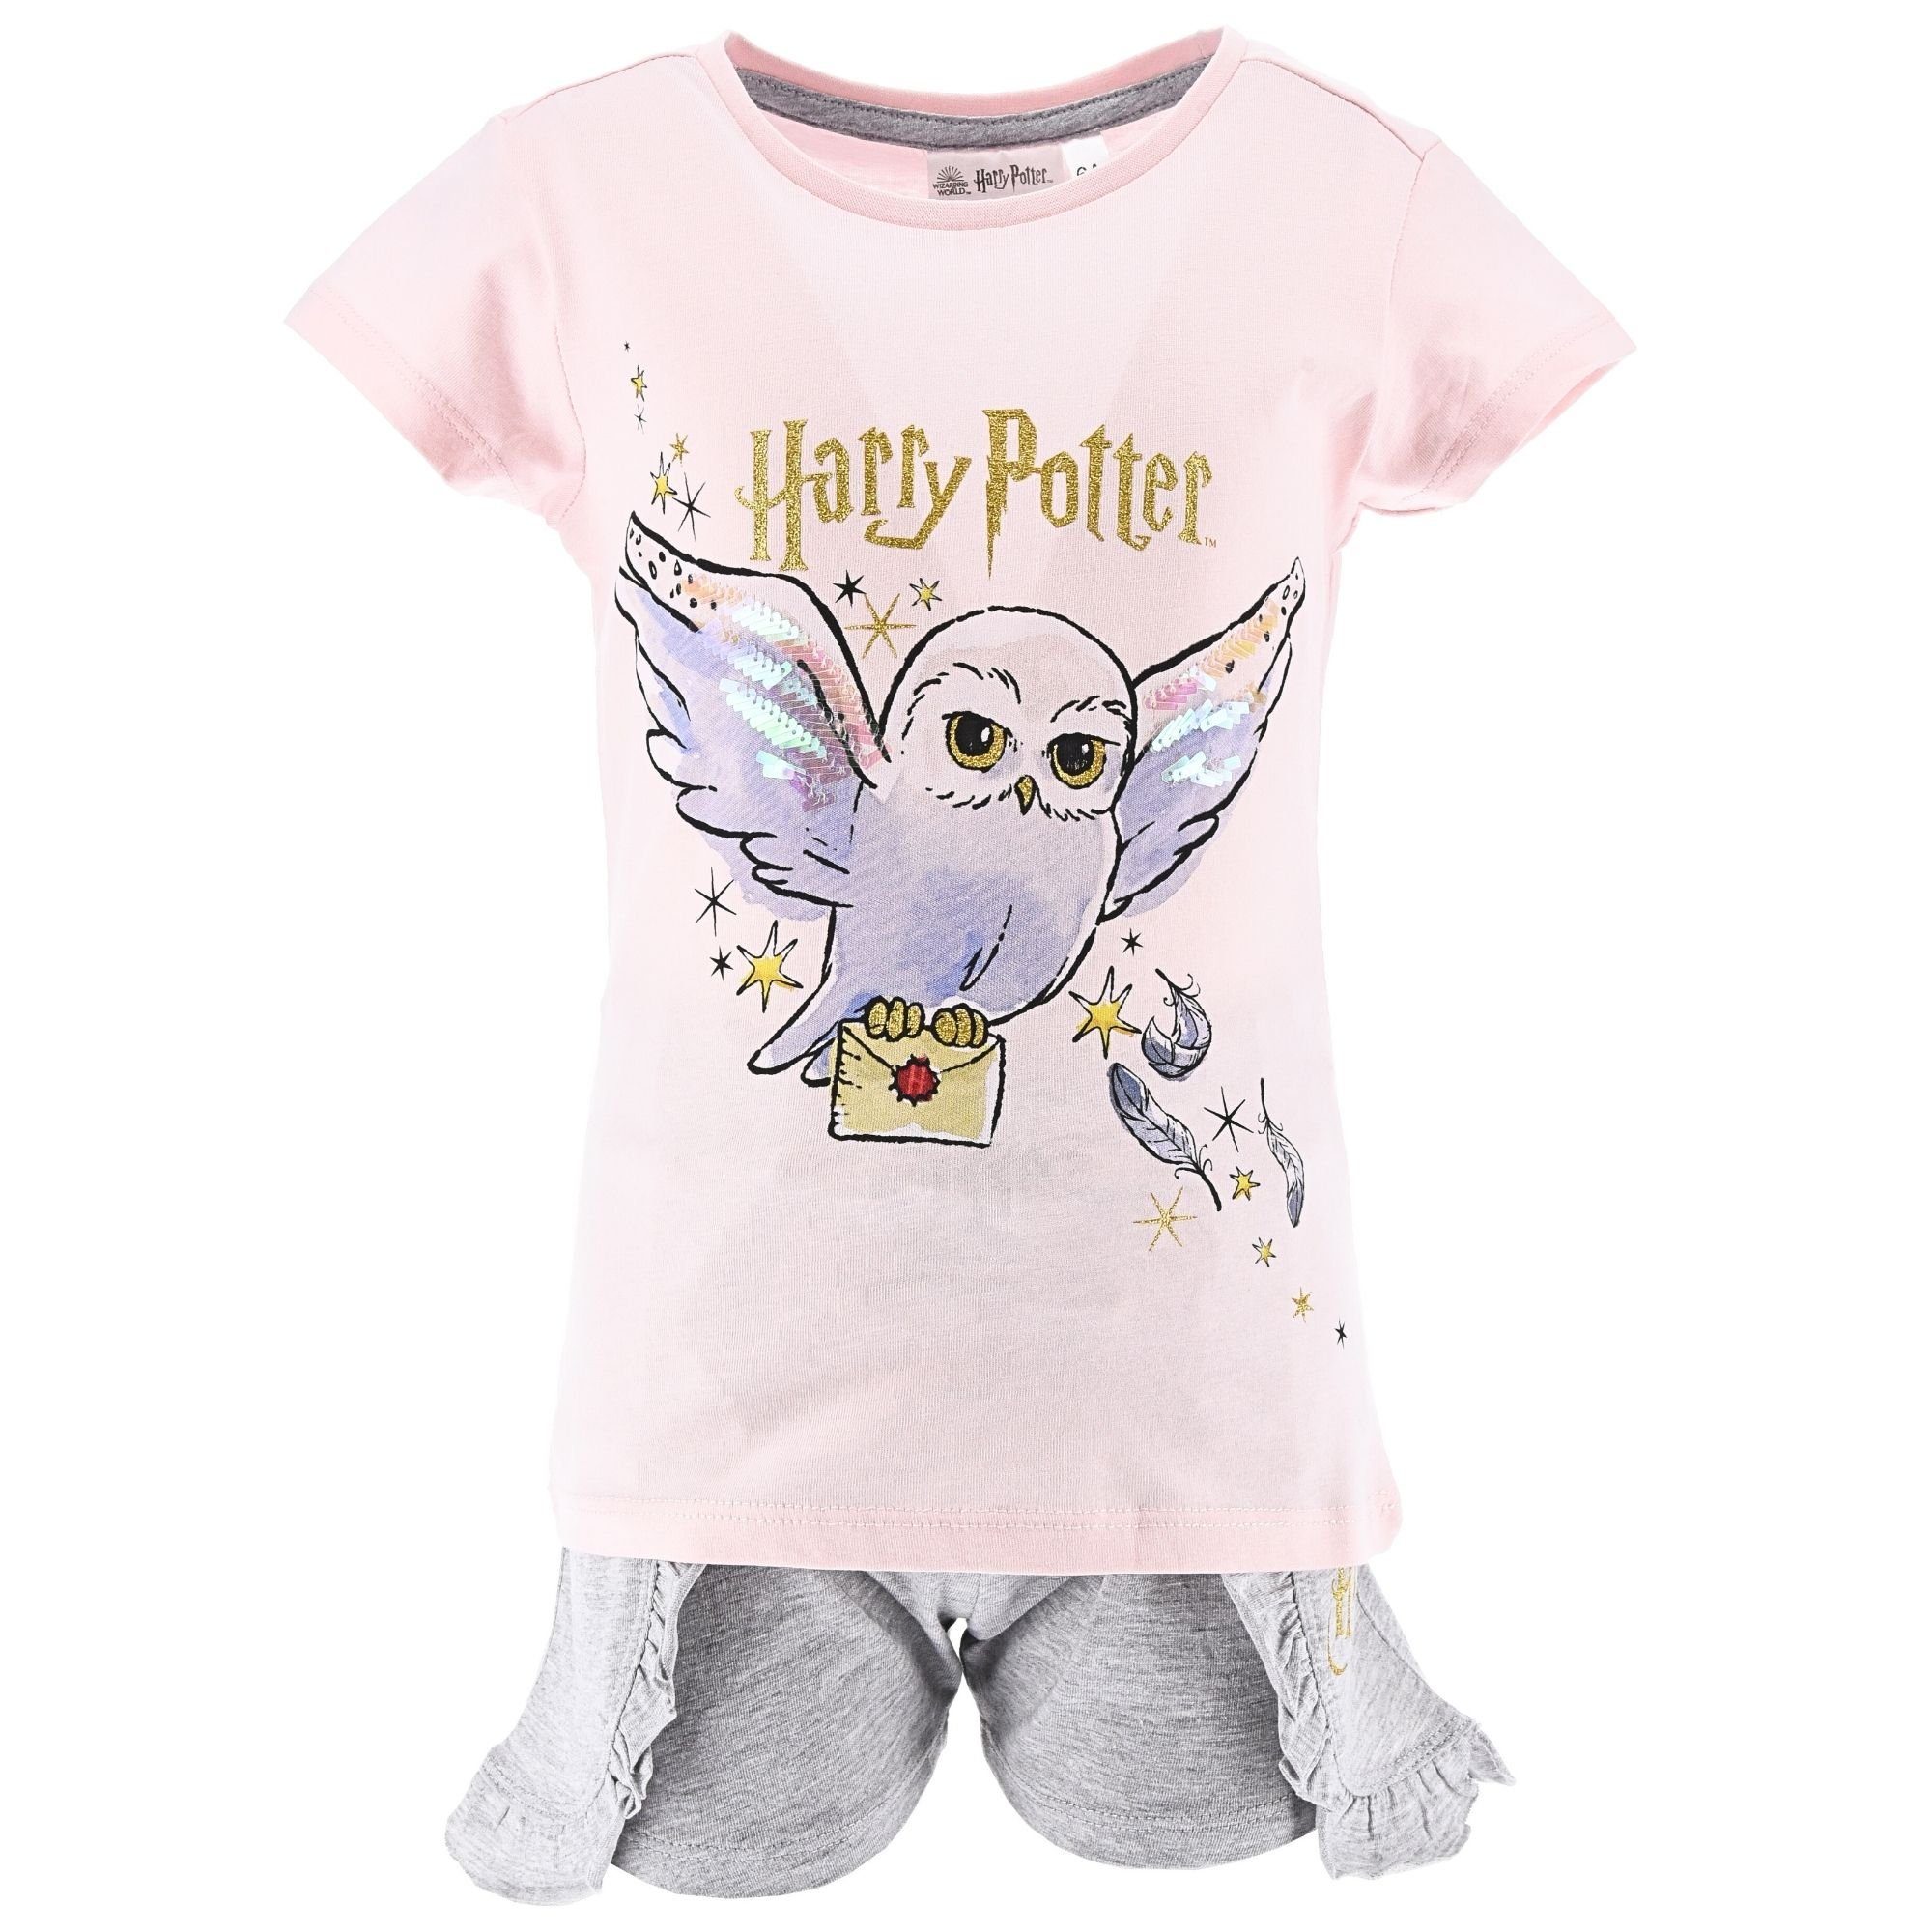 Harry Potter Schlafanzug Hedwig (2 tlg) Mädchen Pyjama Set kurz Gr. 98-128 cm Rosa-Grau